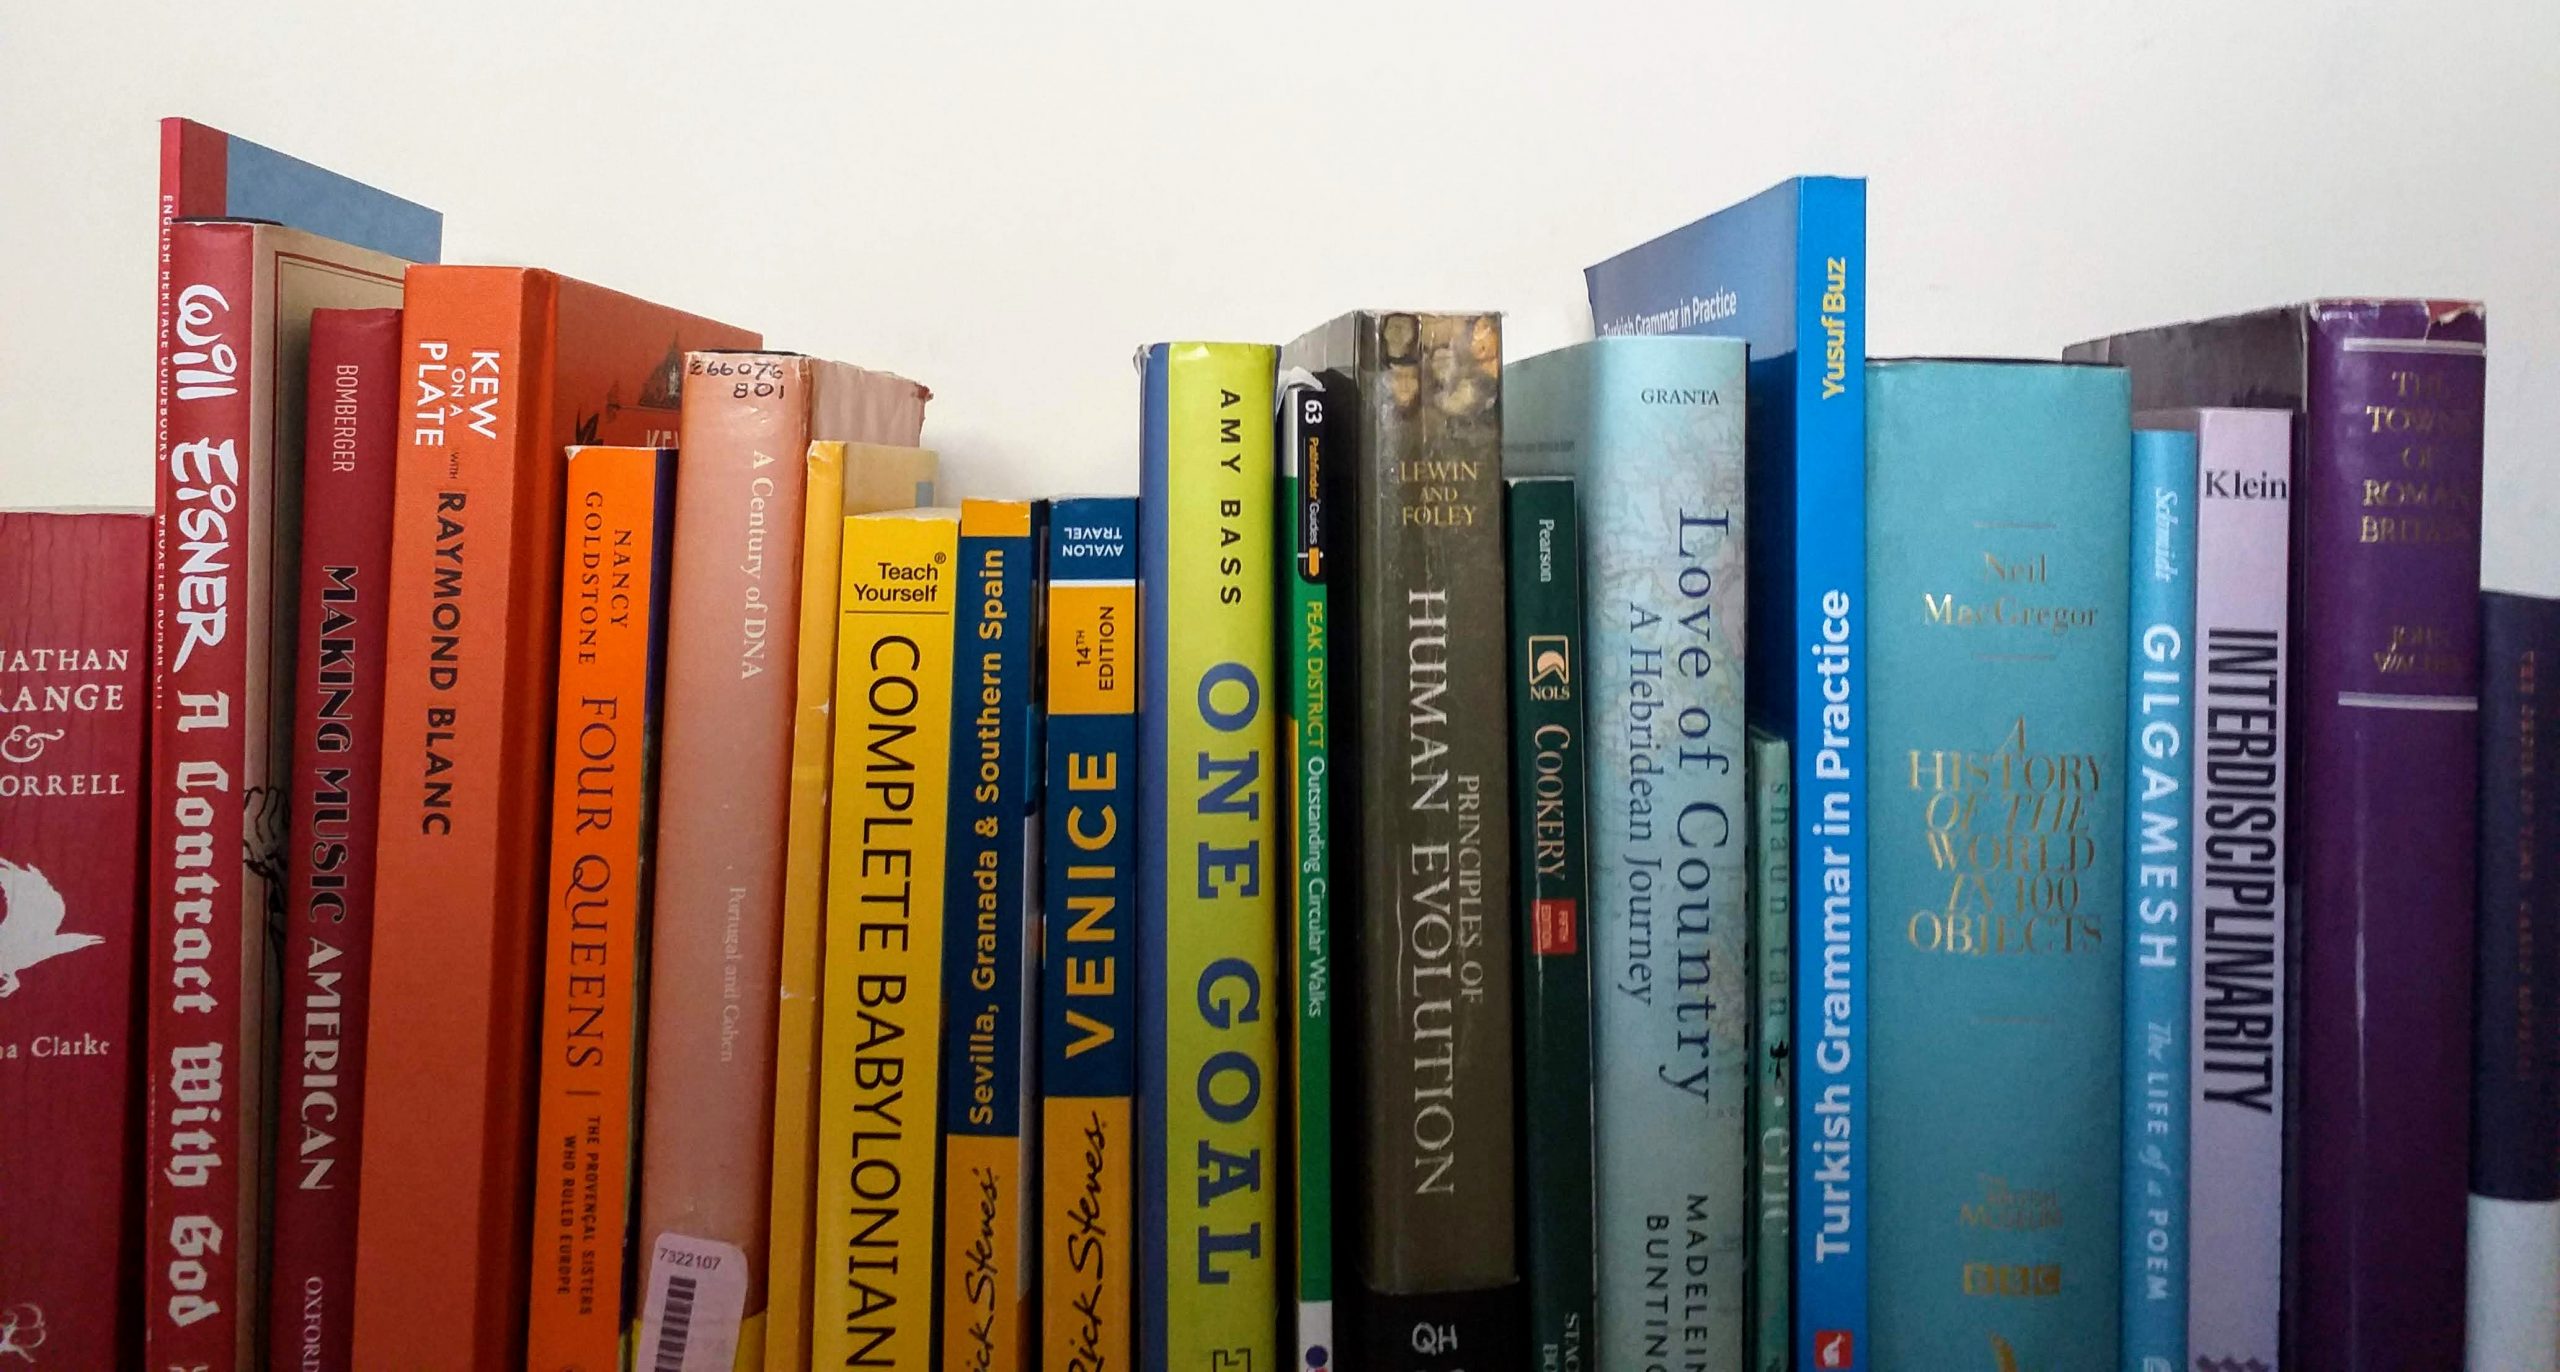 An interdisciplinary bookshelf